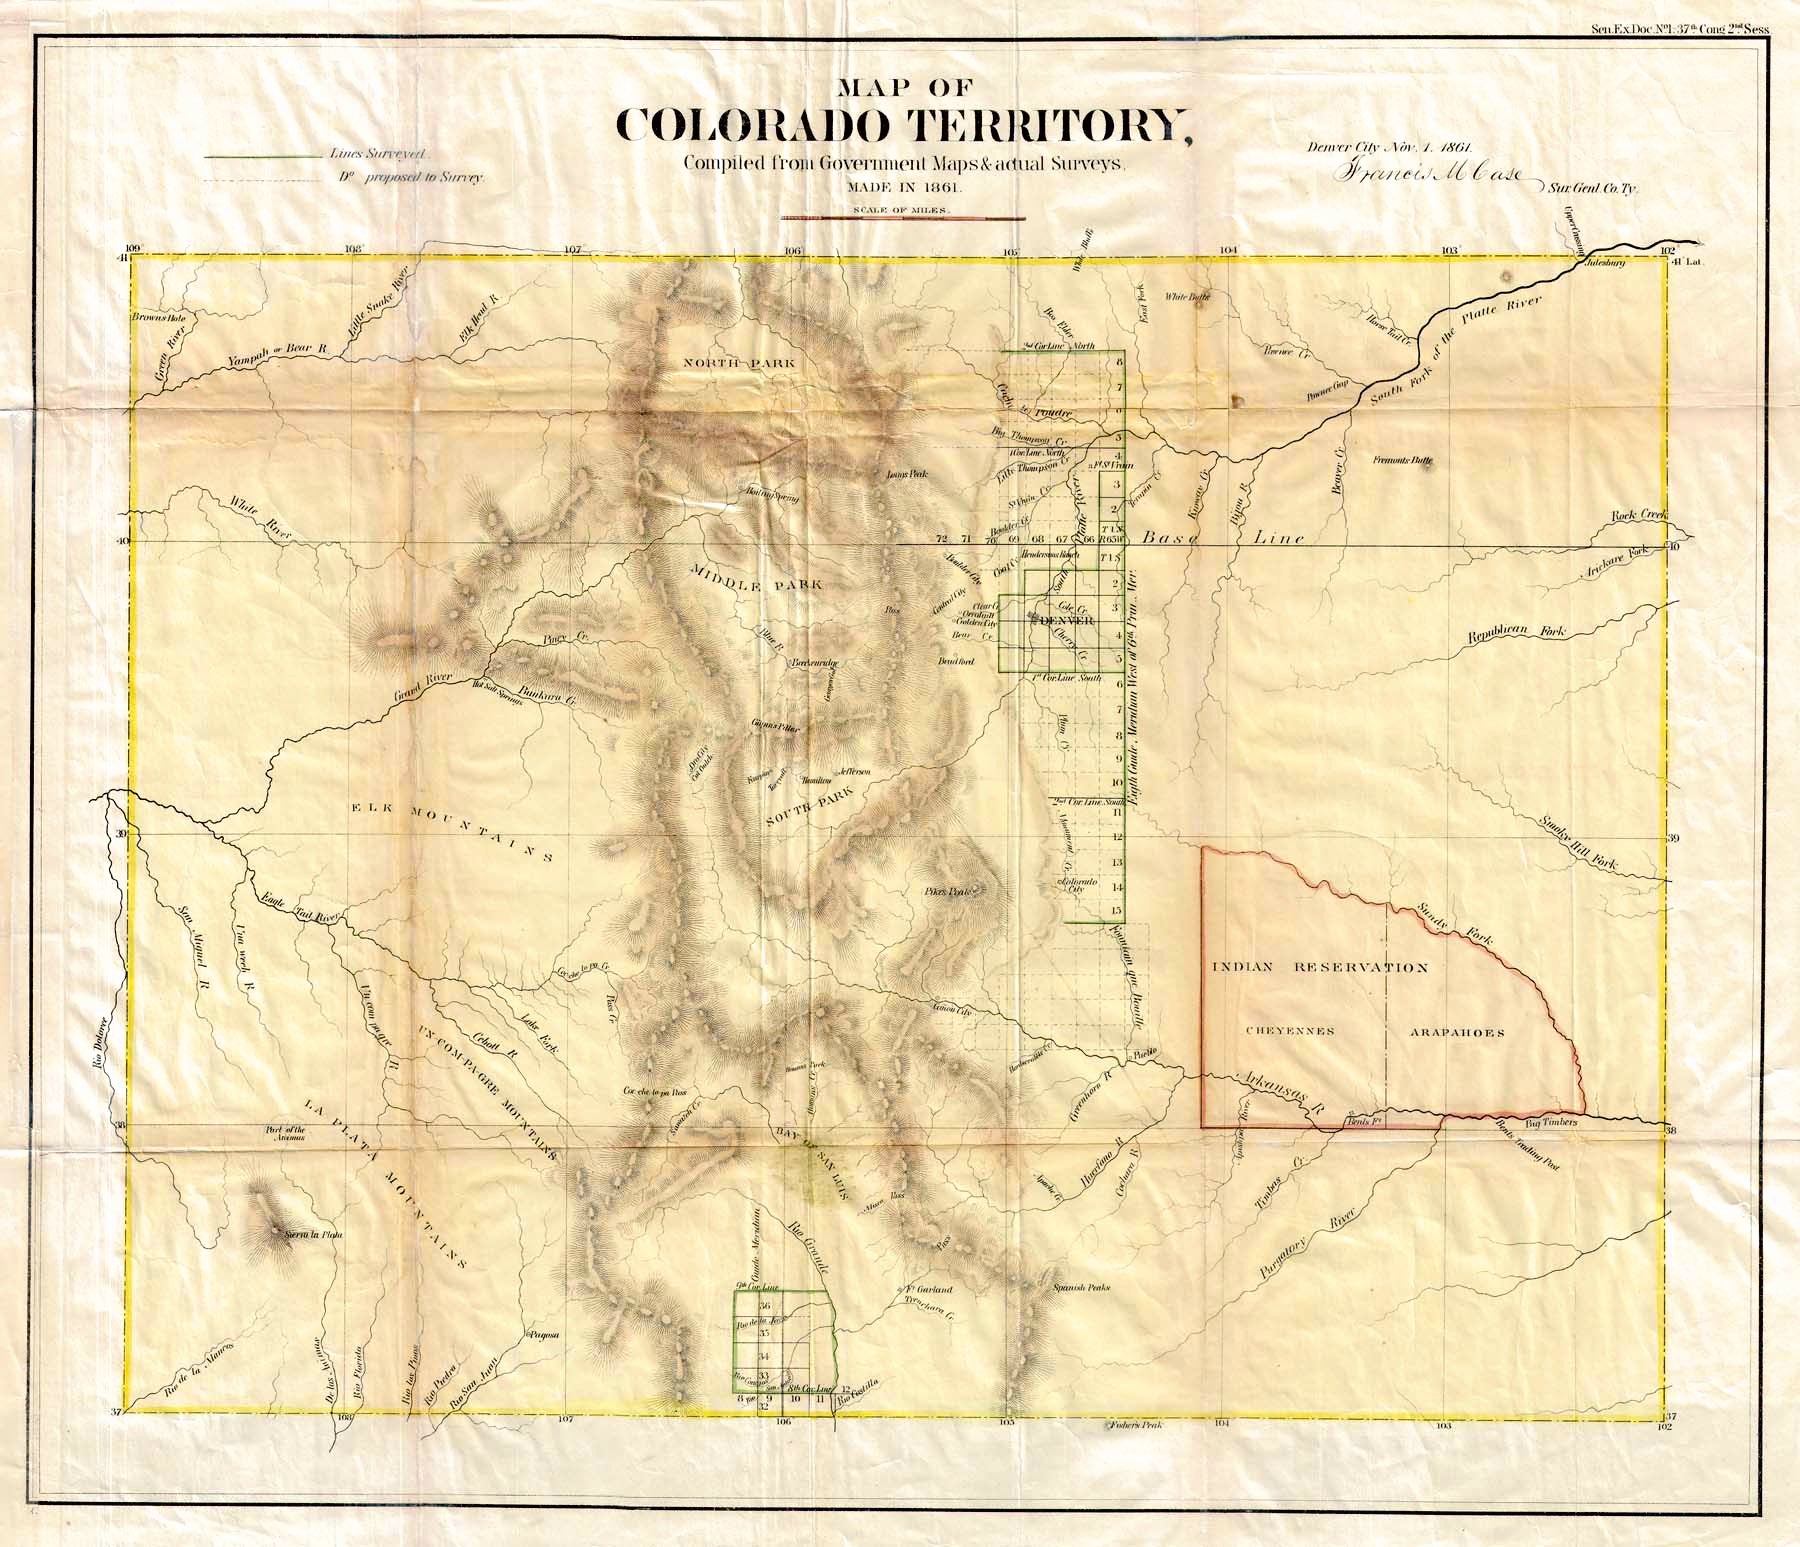 (CO.) Map of Colorado Territory